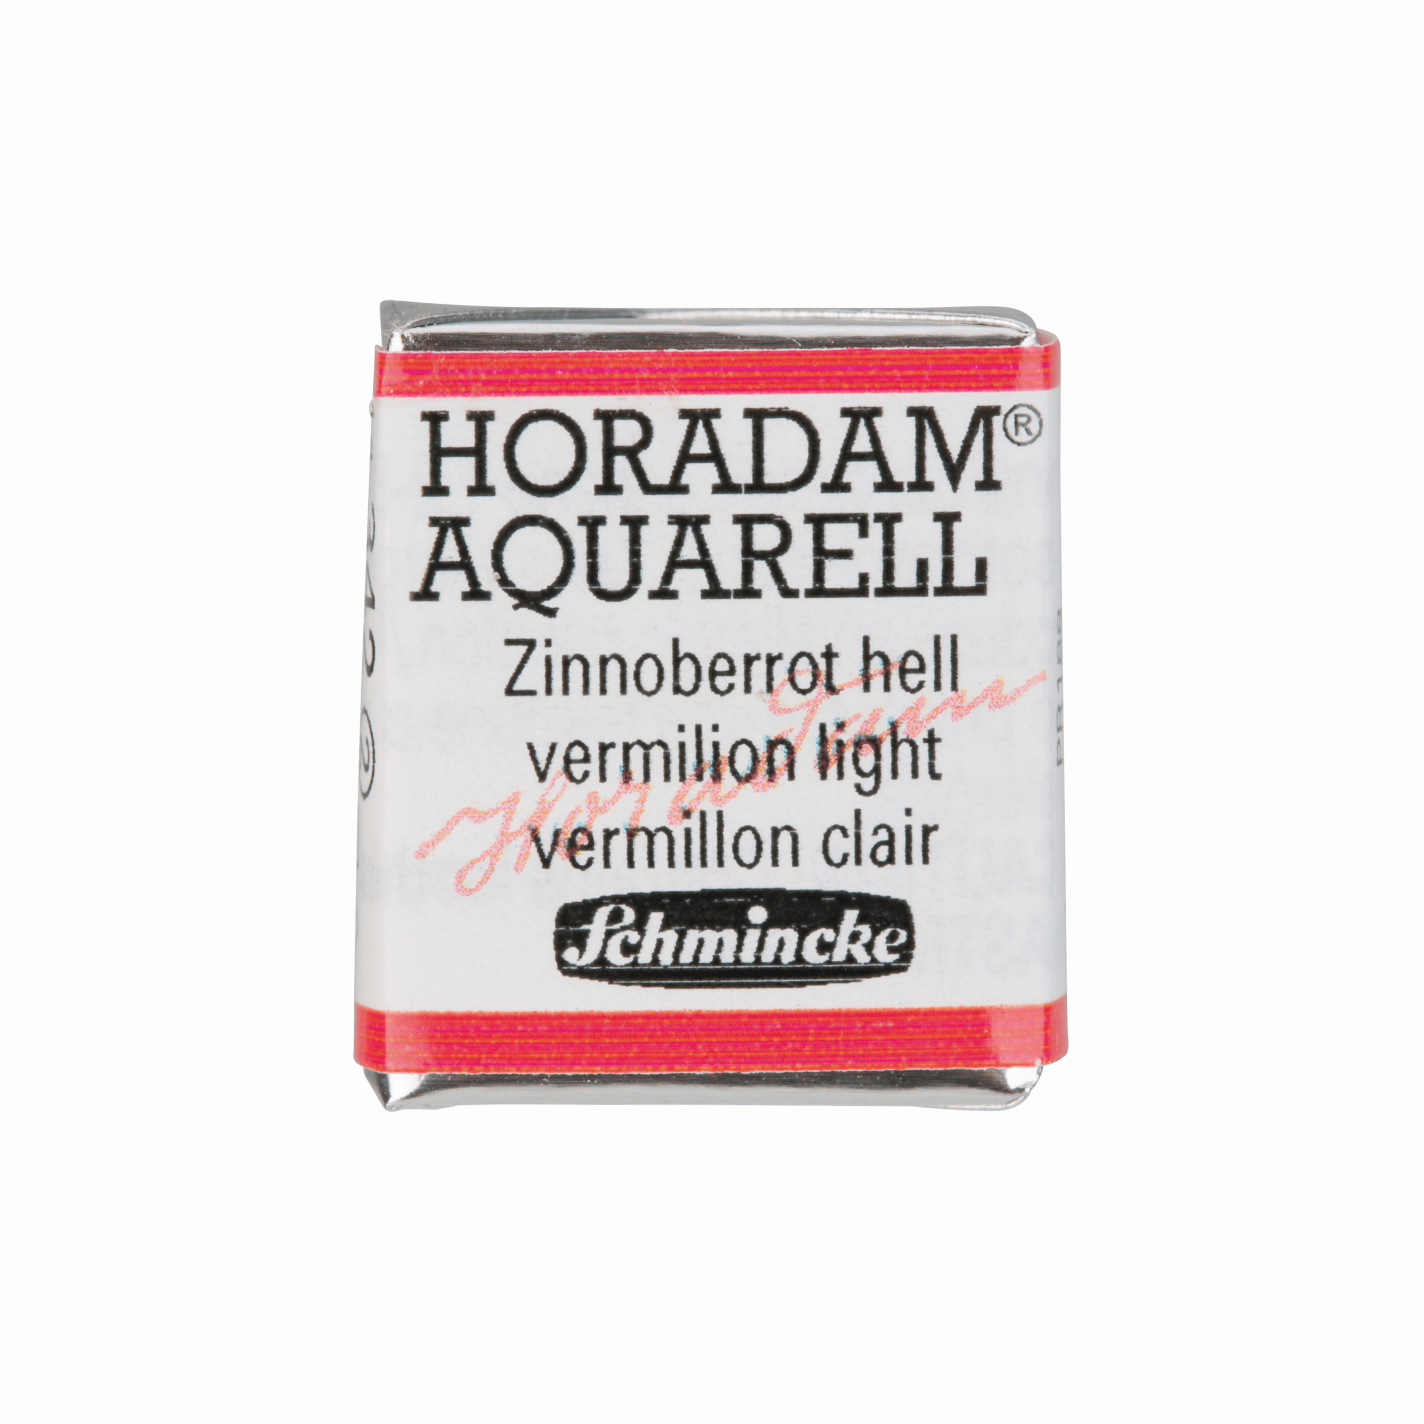 Schmincke Horadam Aquarell pans 1/2 pan Vermilion Light